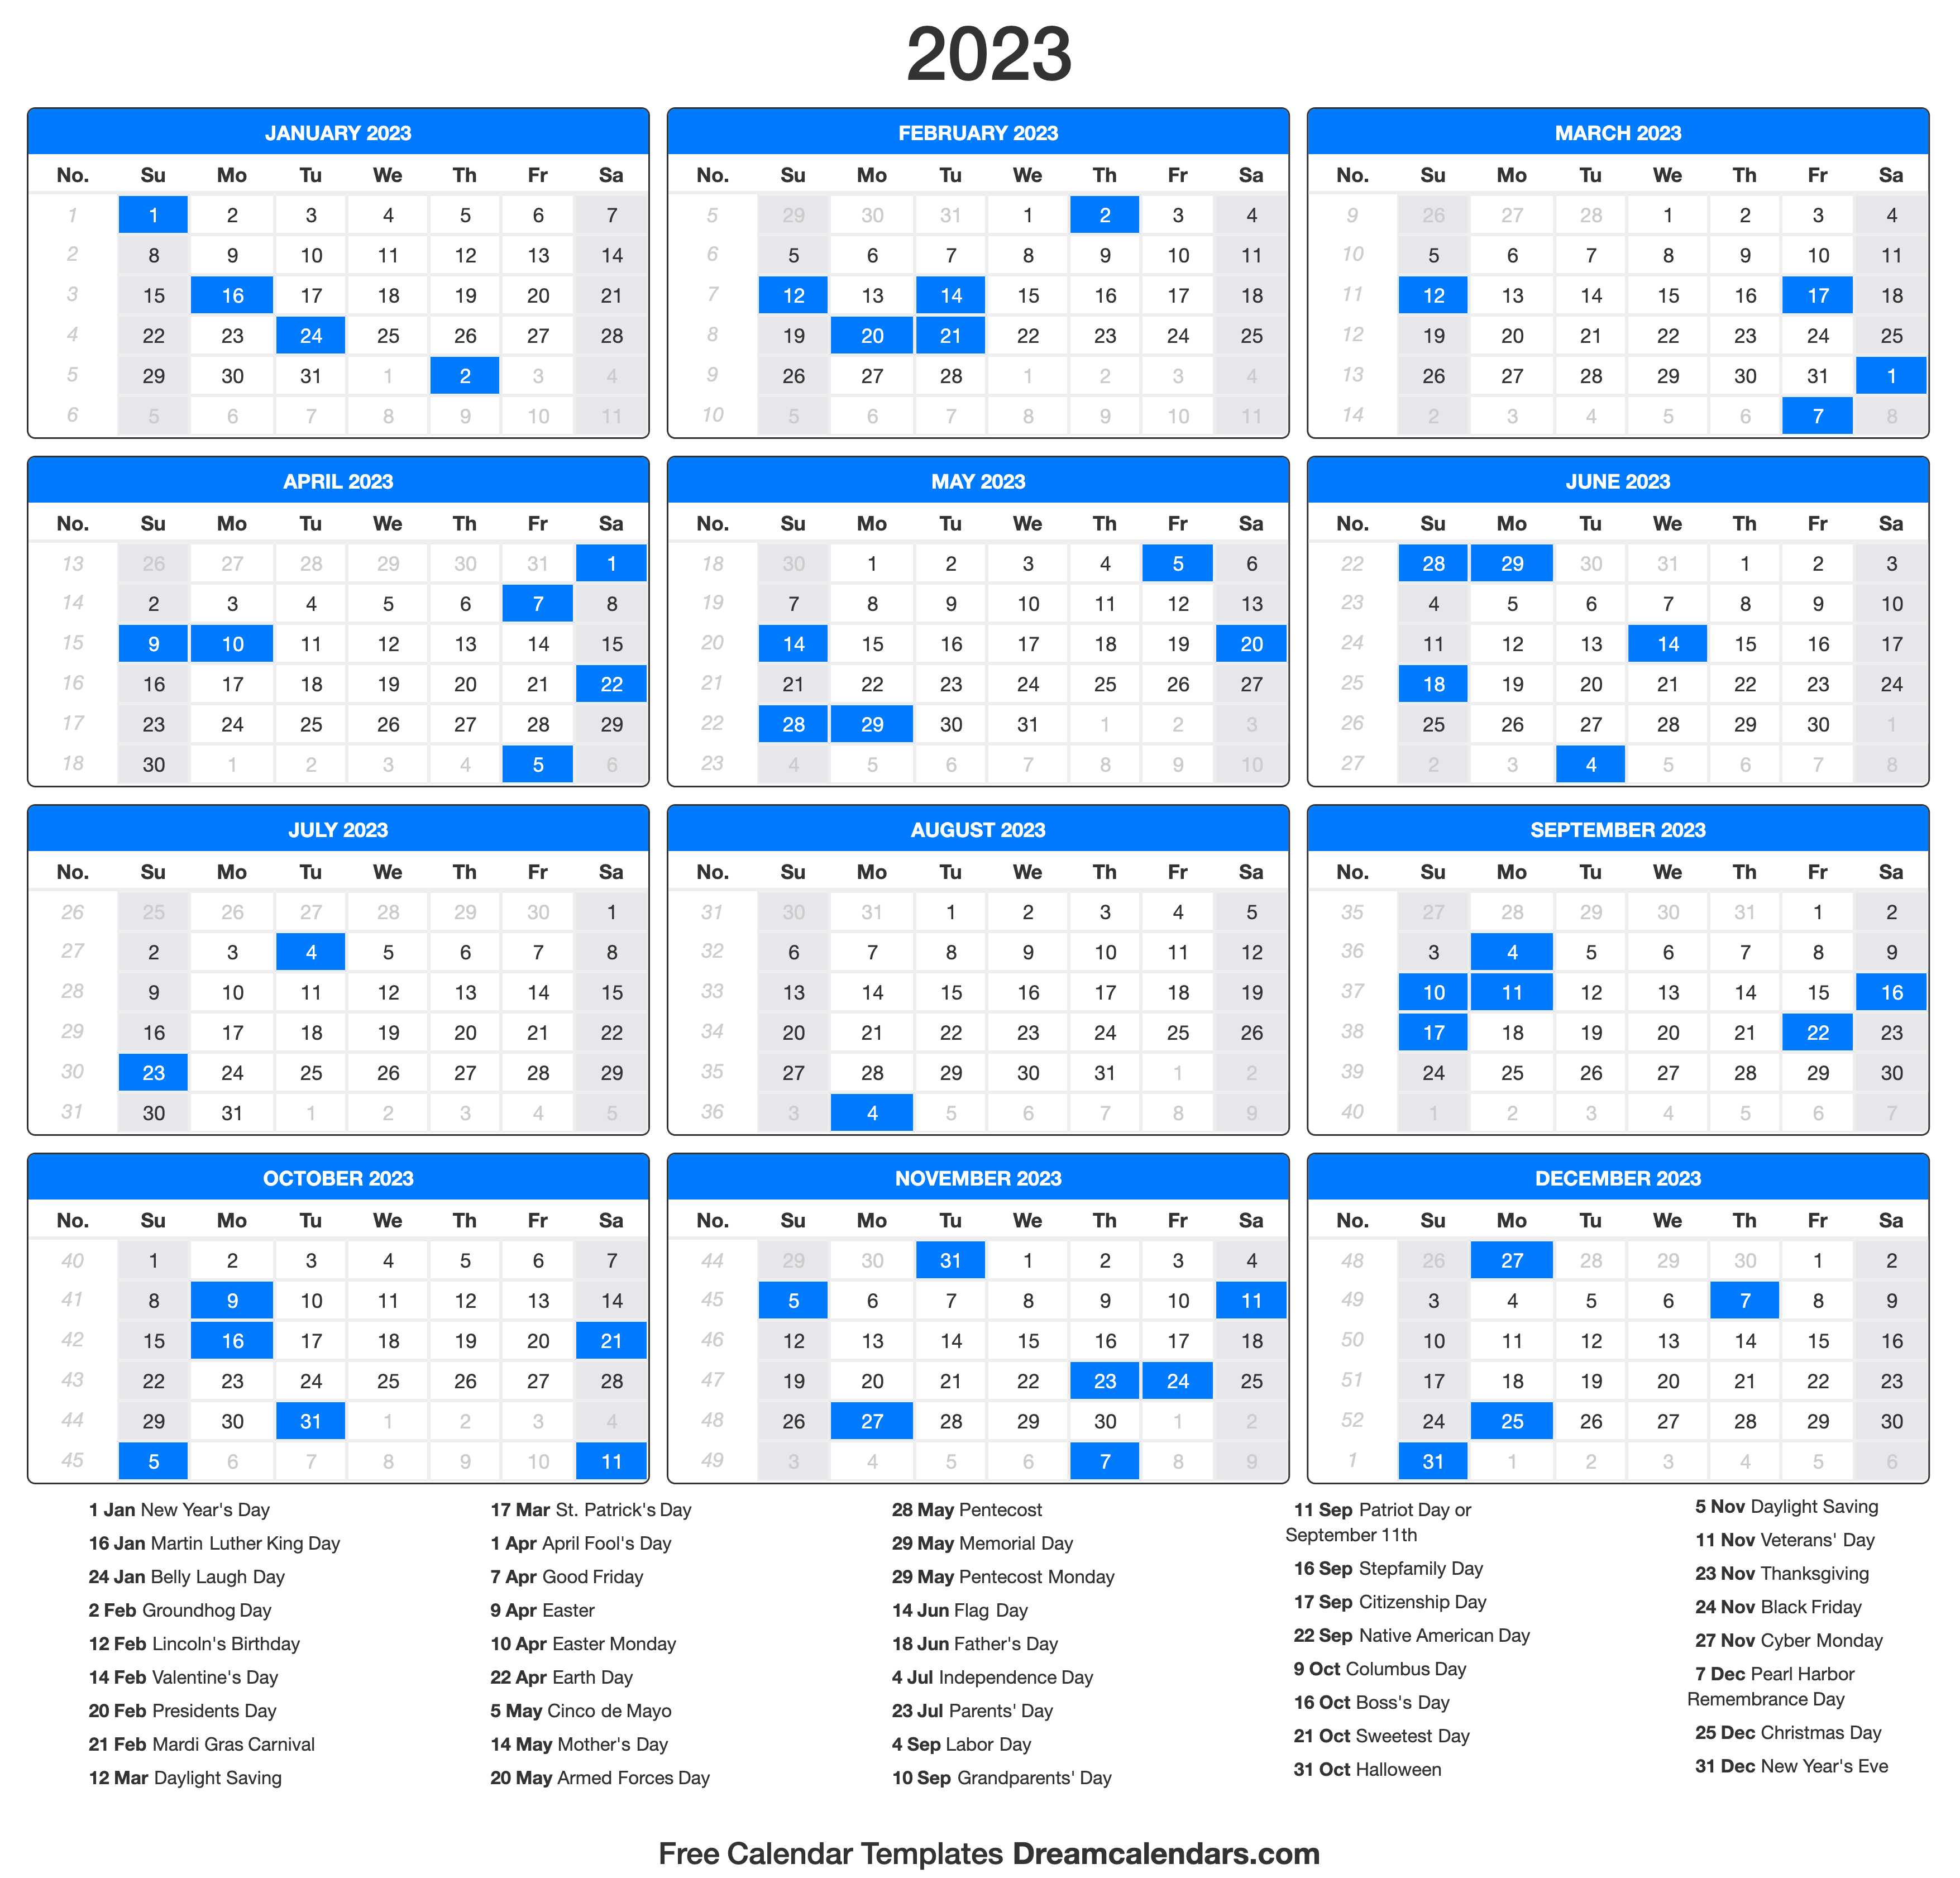 Umich Fall 2023 Calendar 2023 Calendar